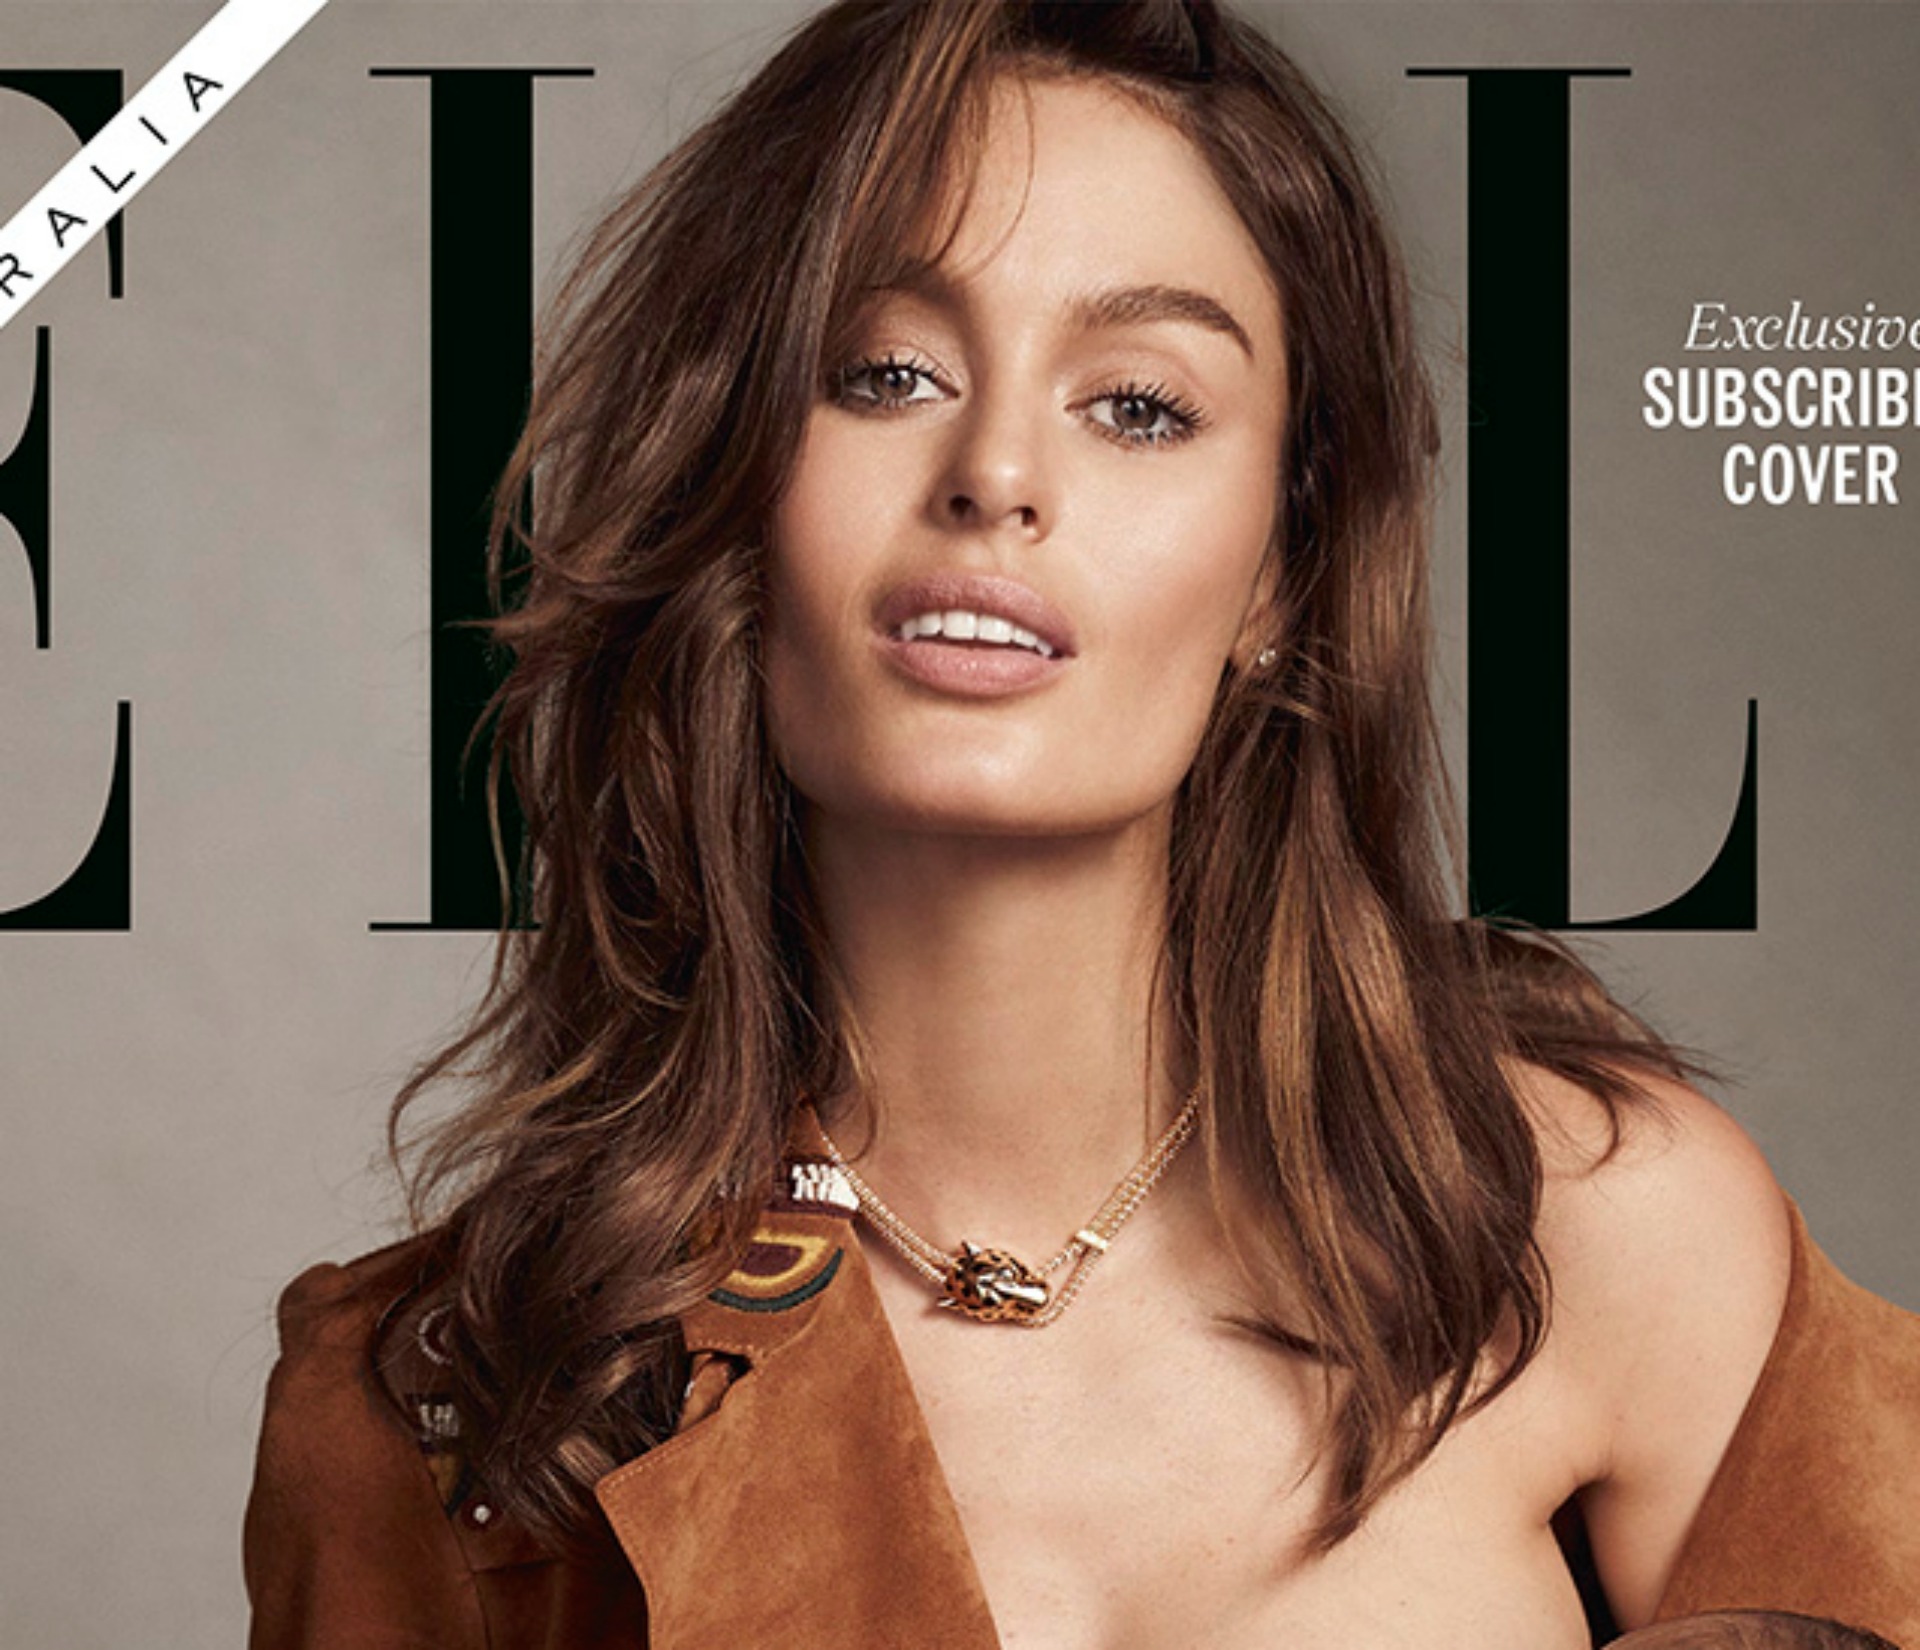 Elle magazine release powerful breastfeeding cover